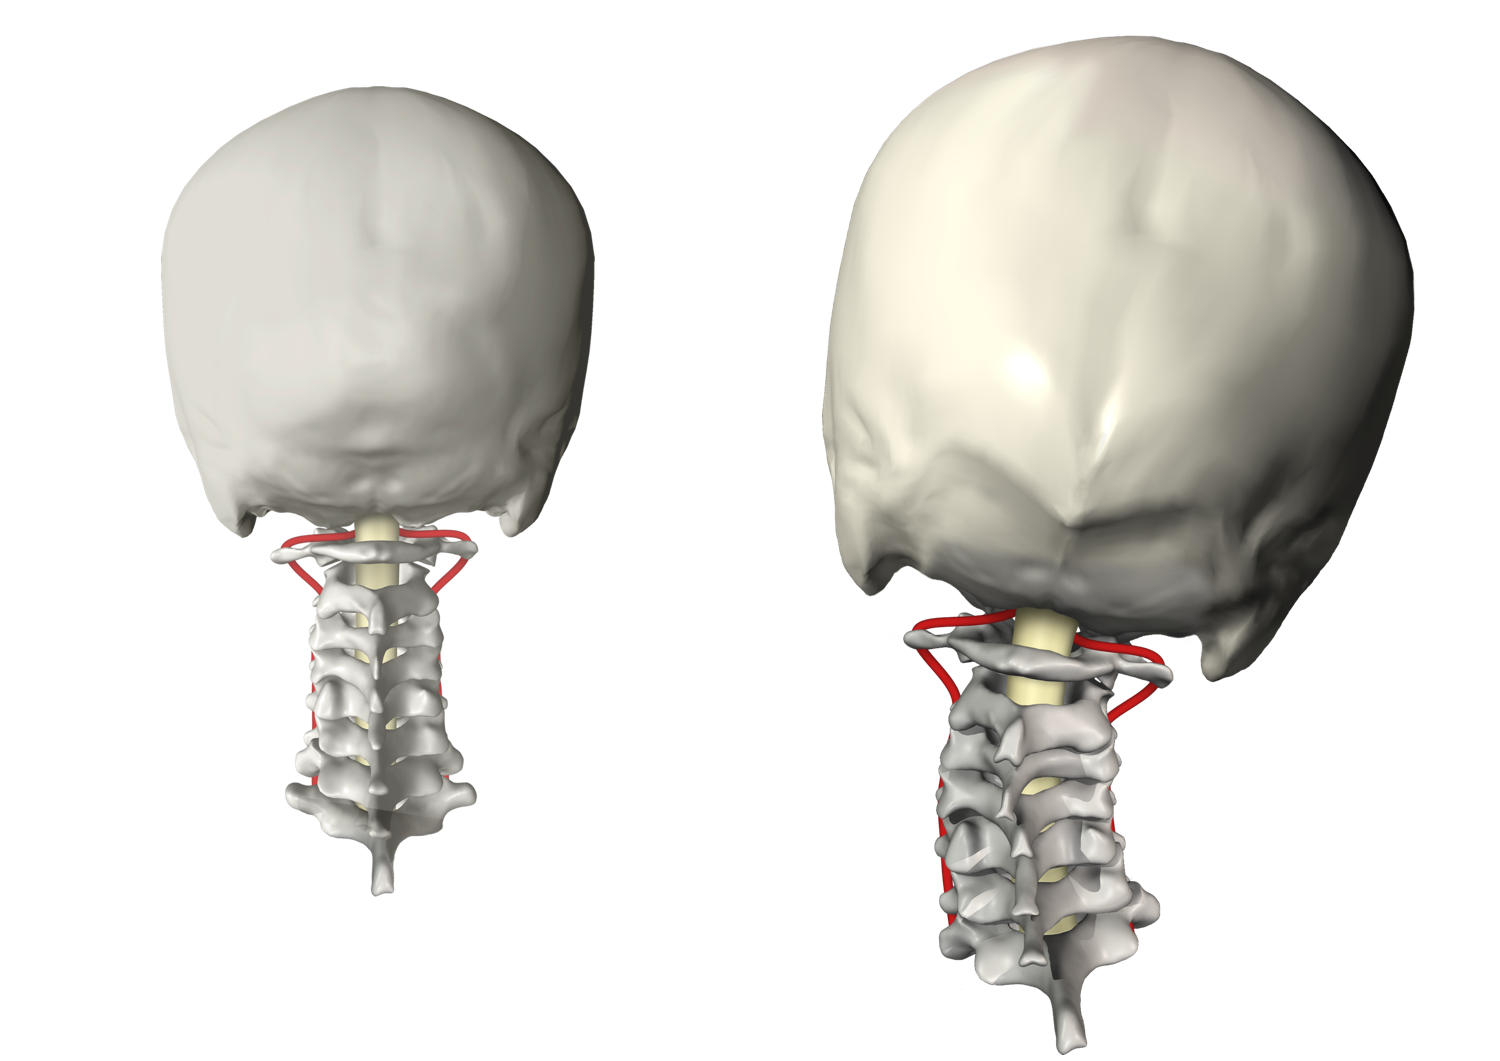 Normal versus Subluxated Cervical Spine 1500 width